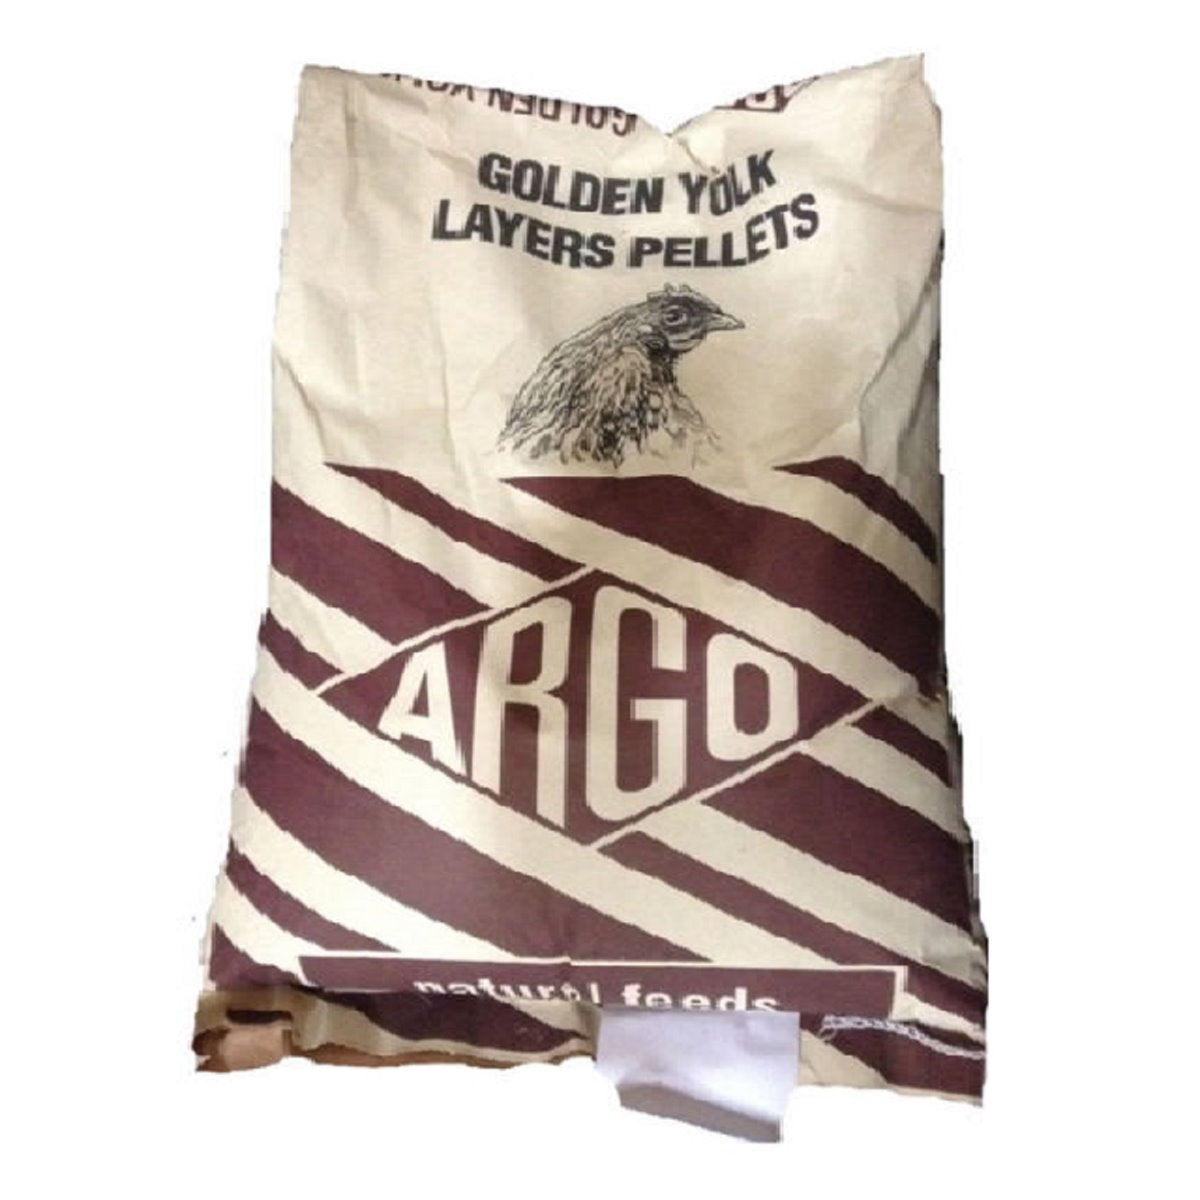 Argo - Golden Yolk Layers Pellets